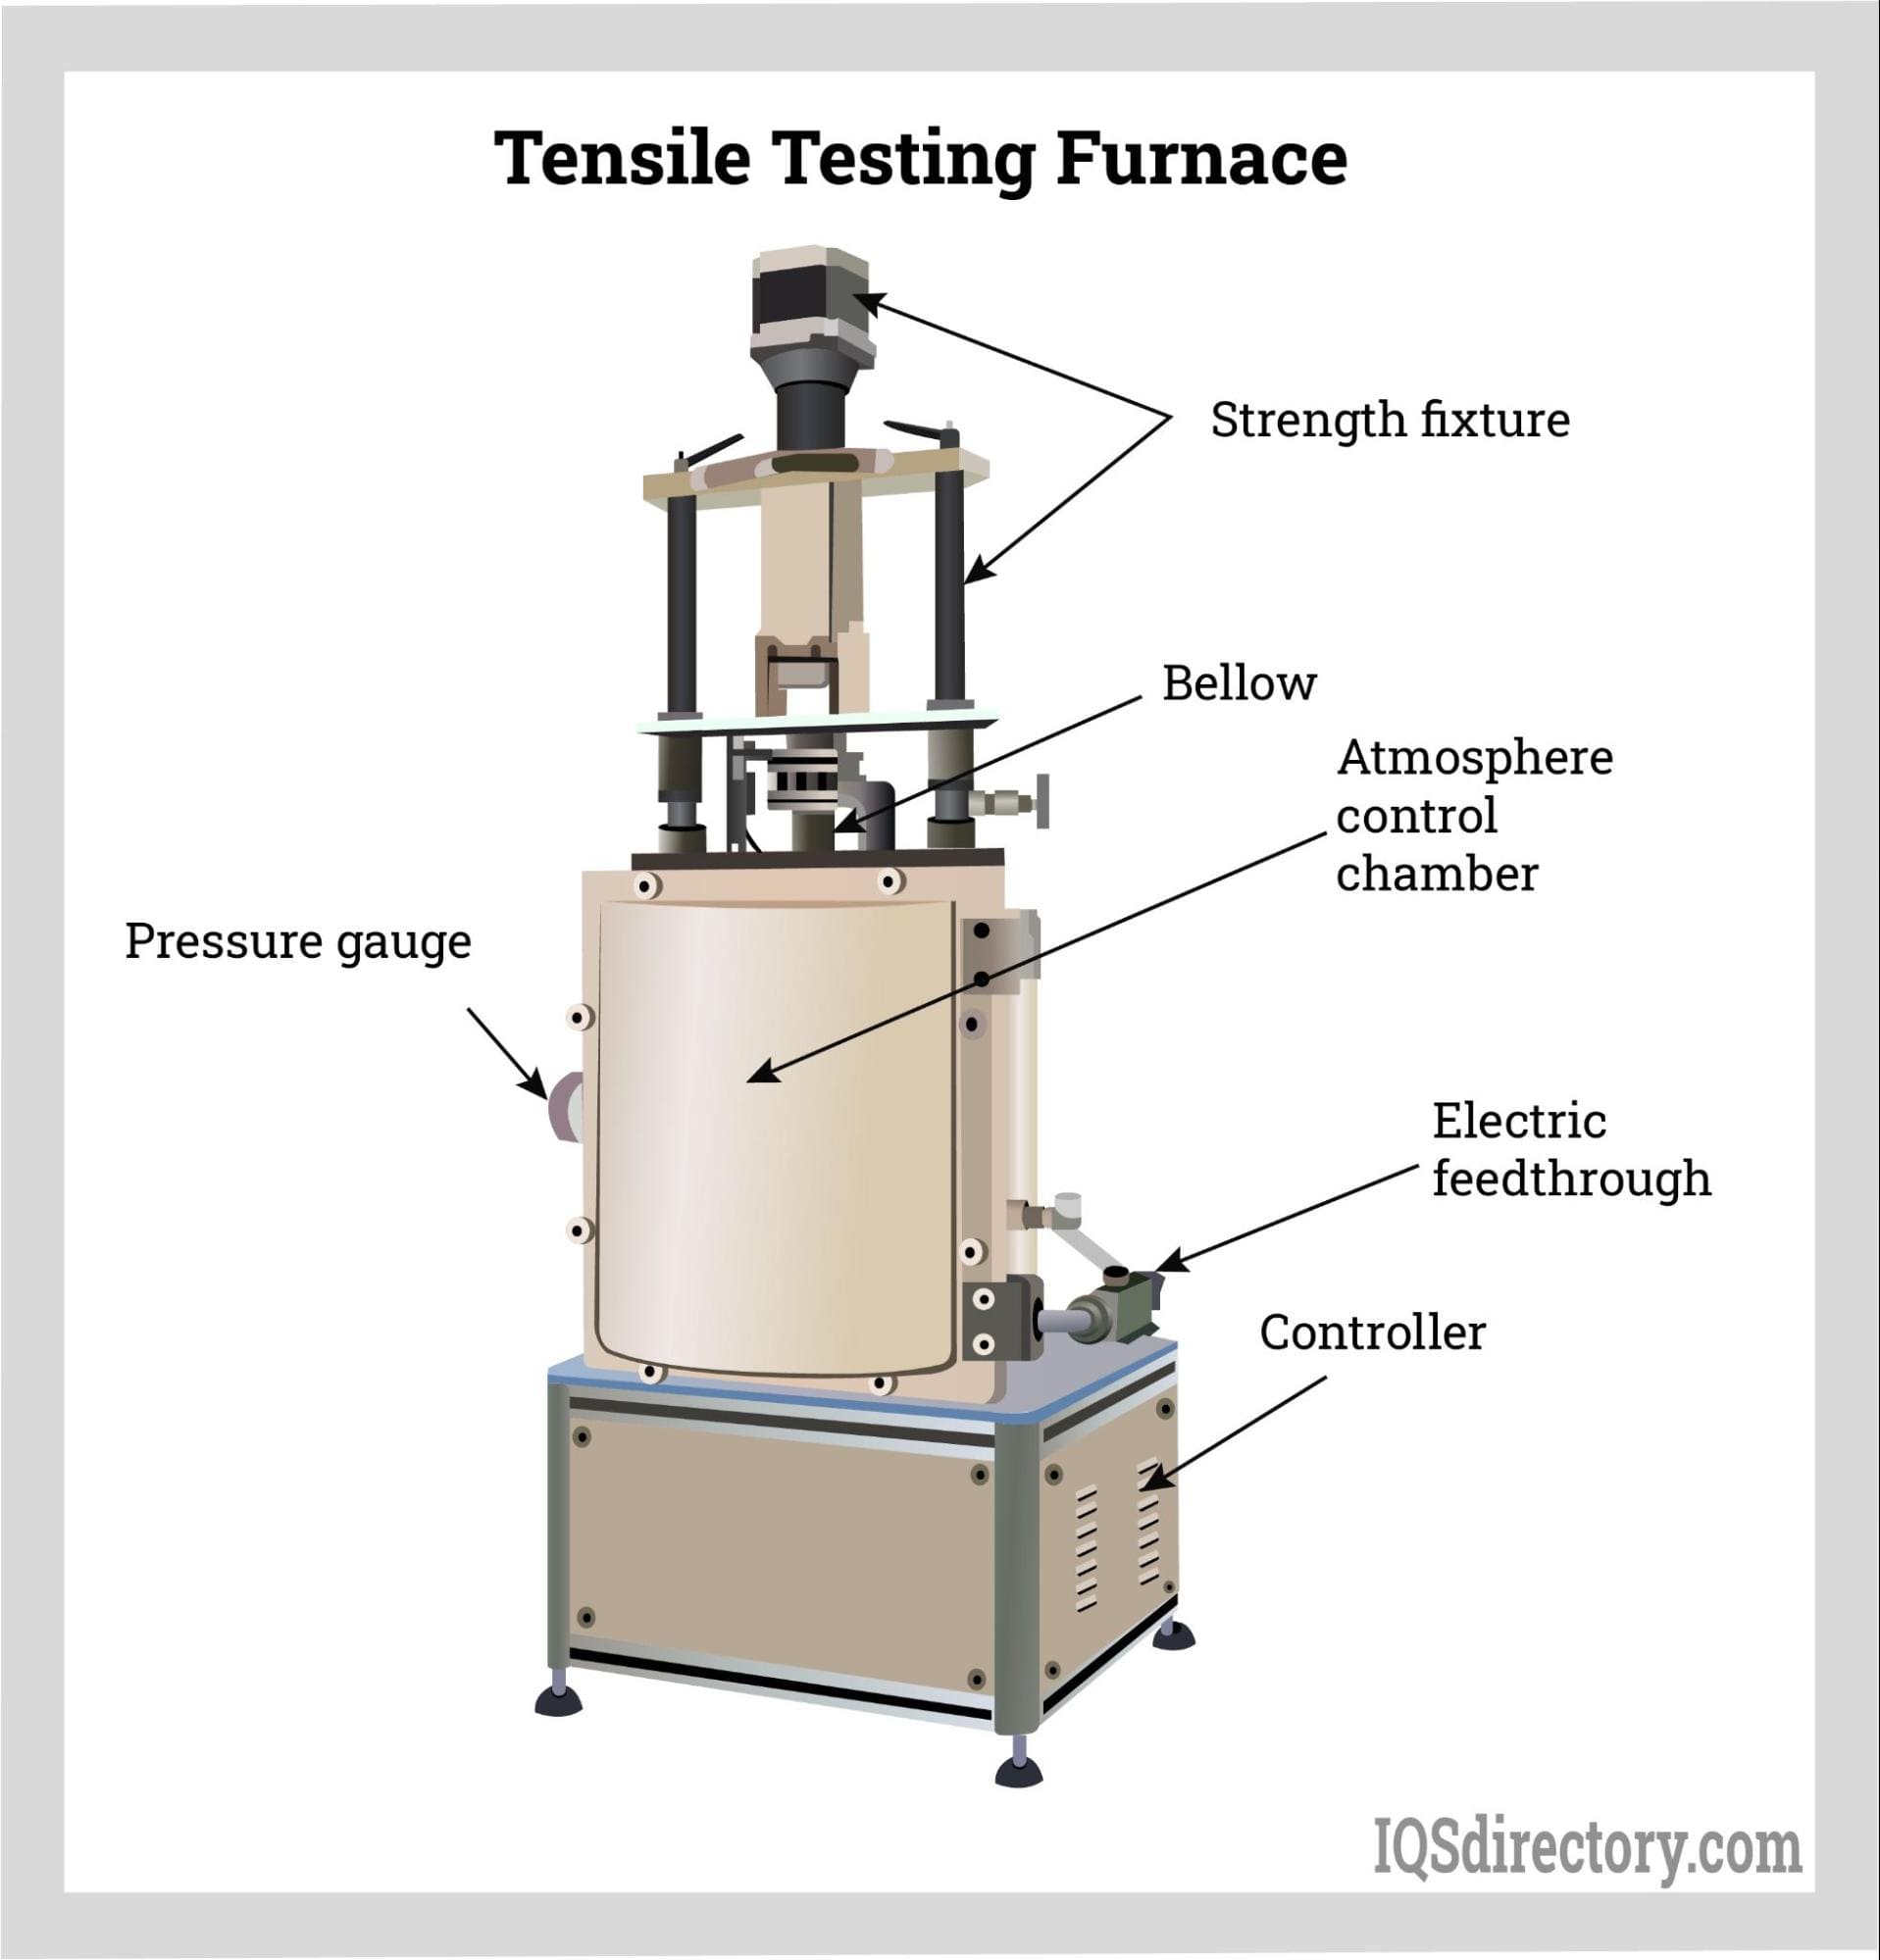 Tensile Testing Furnace